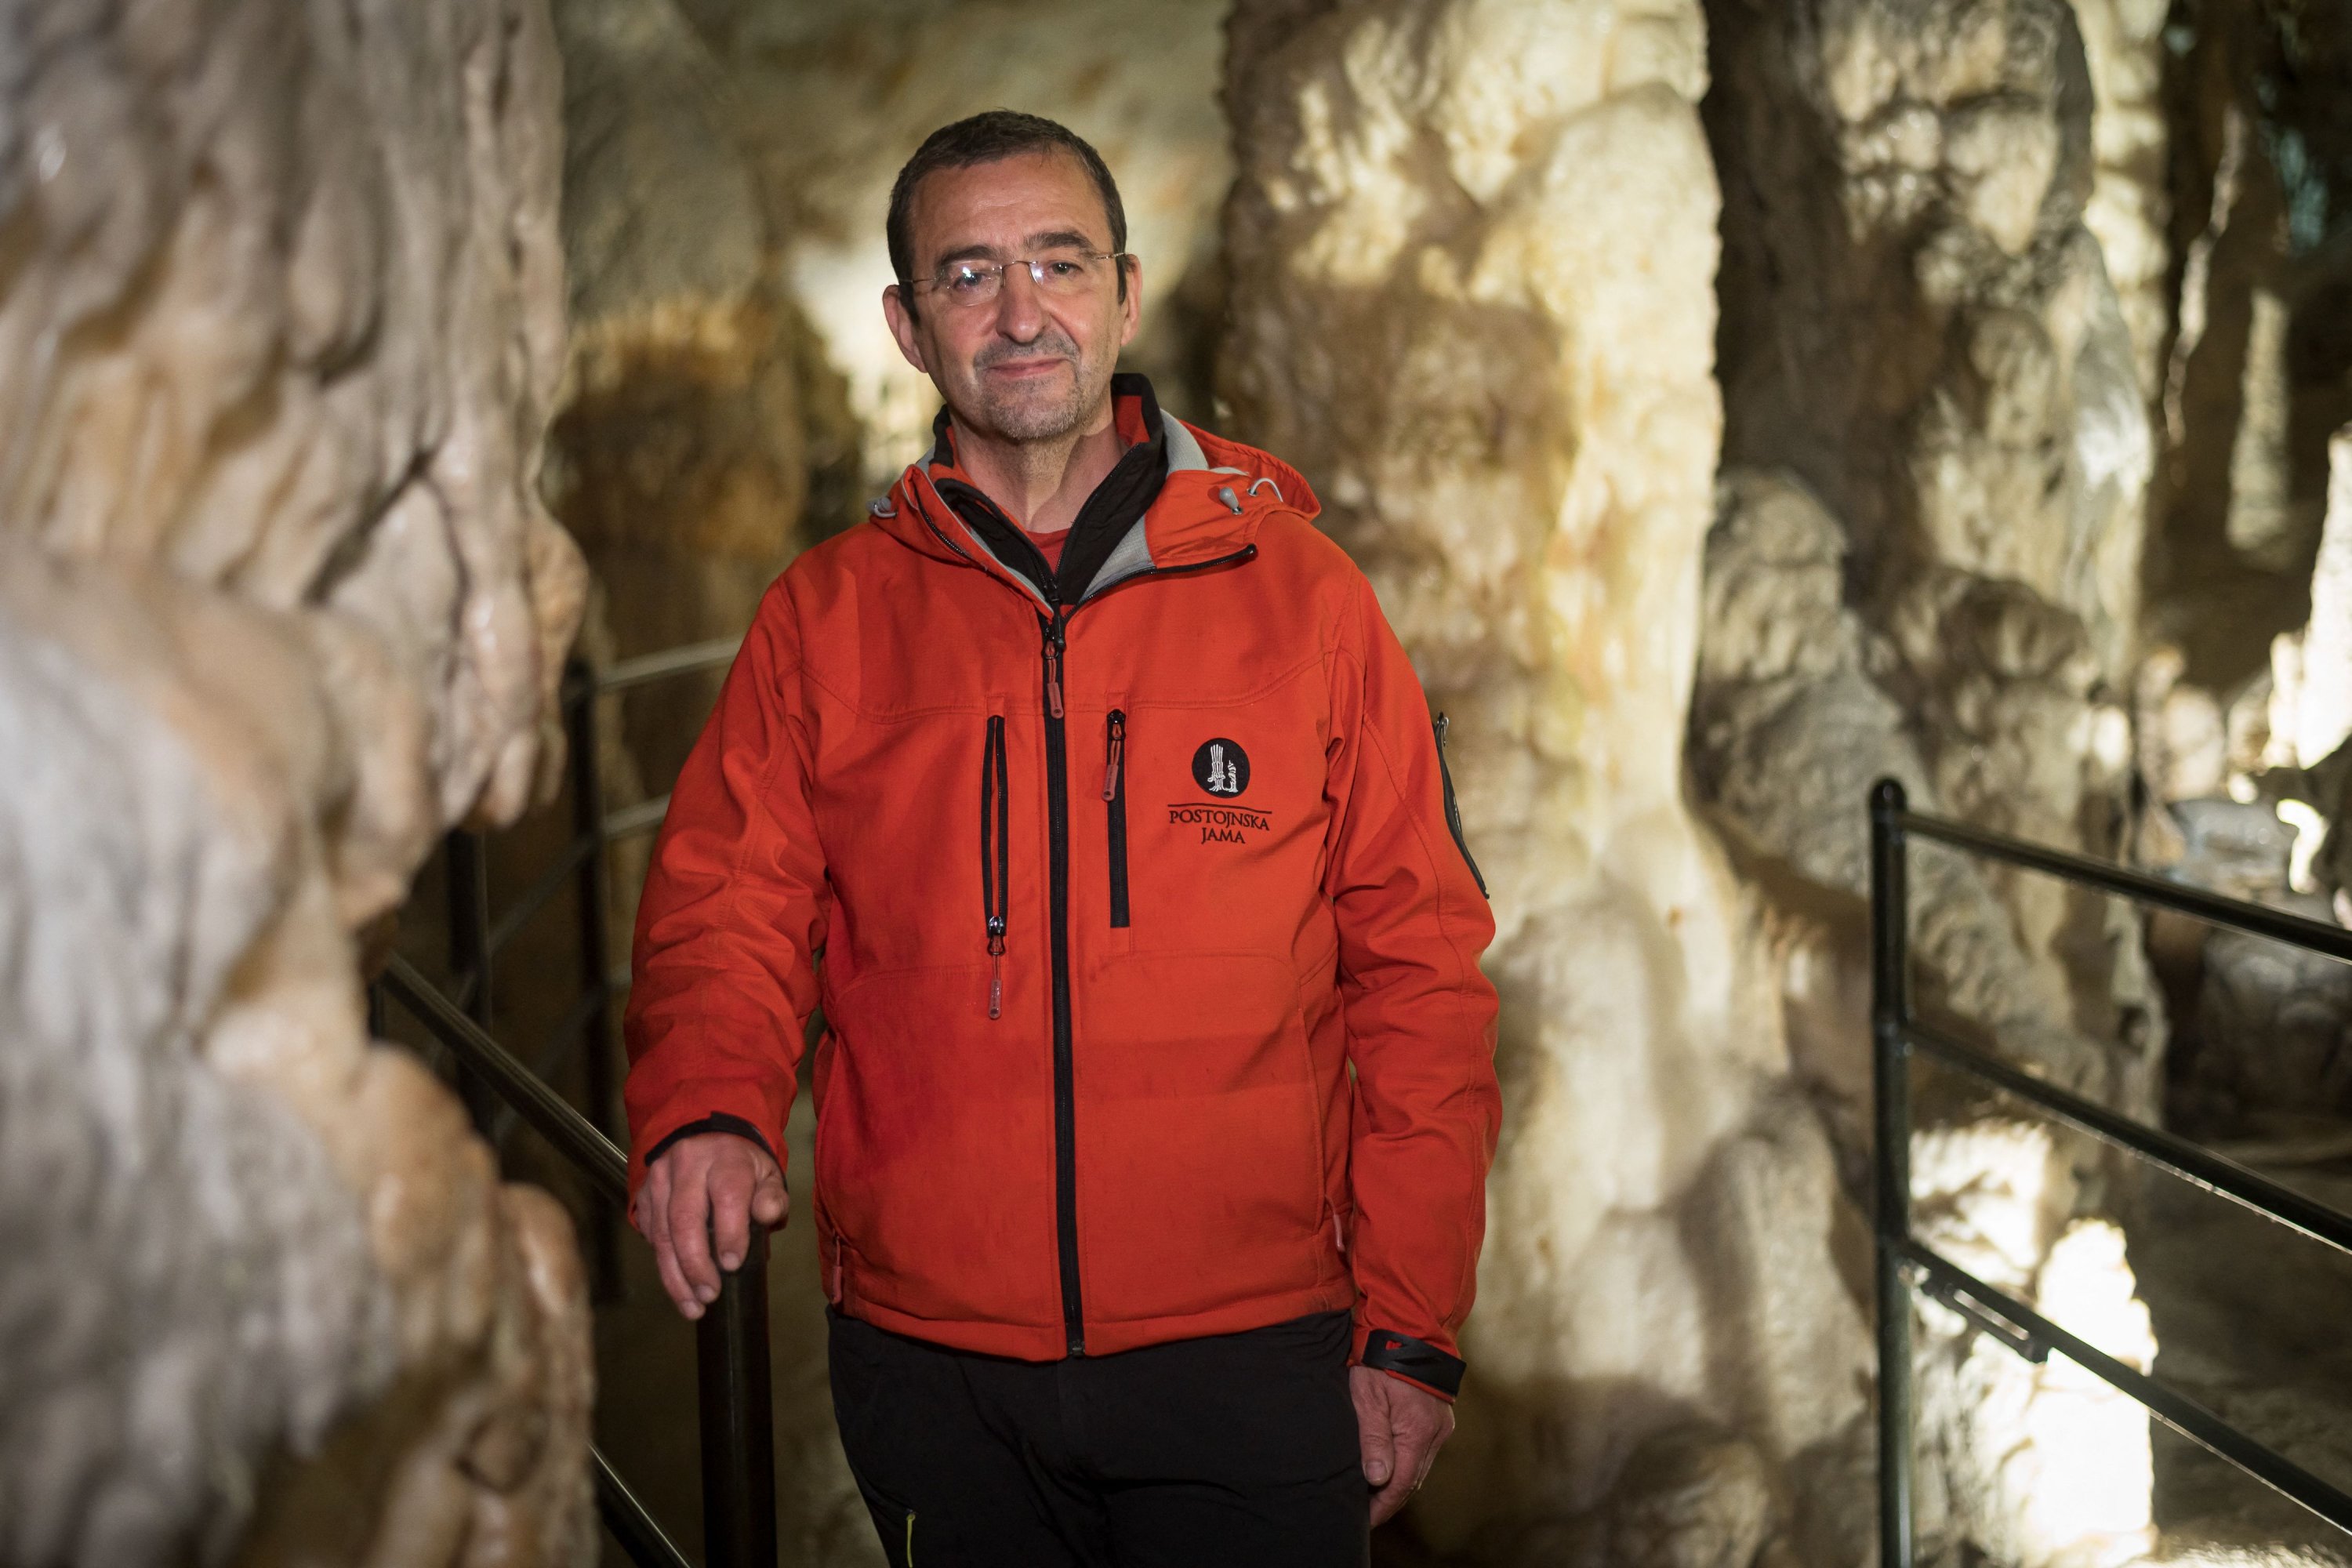 Postojna cave guide and speleology enthusiast Stanislav Glazar poses in the Postojna Cave in Postojna, Slovenia, May 25, 2021. (AFP Photo)